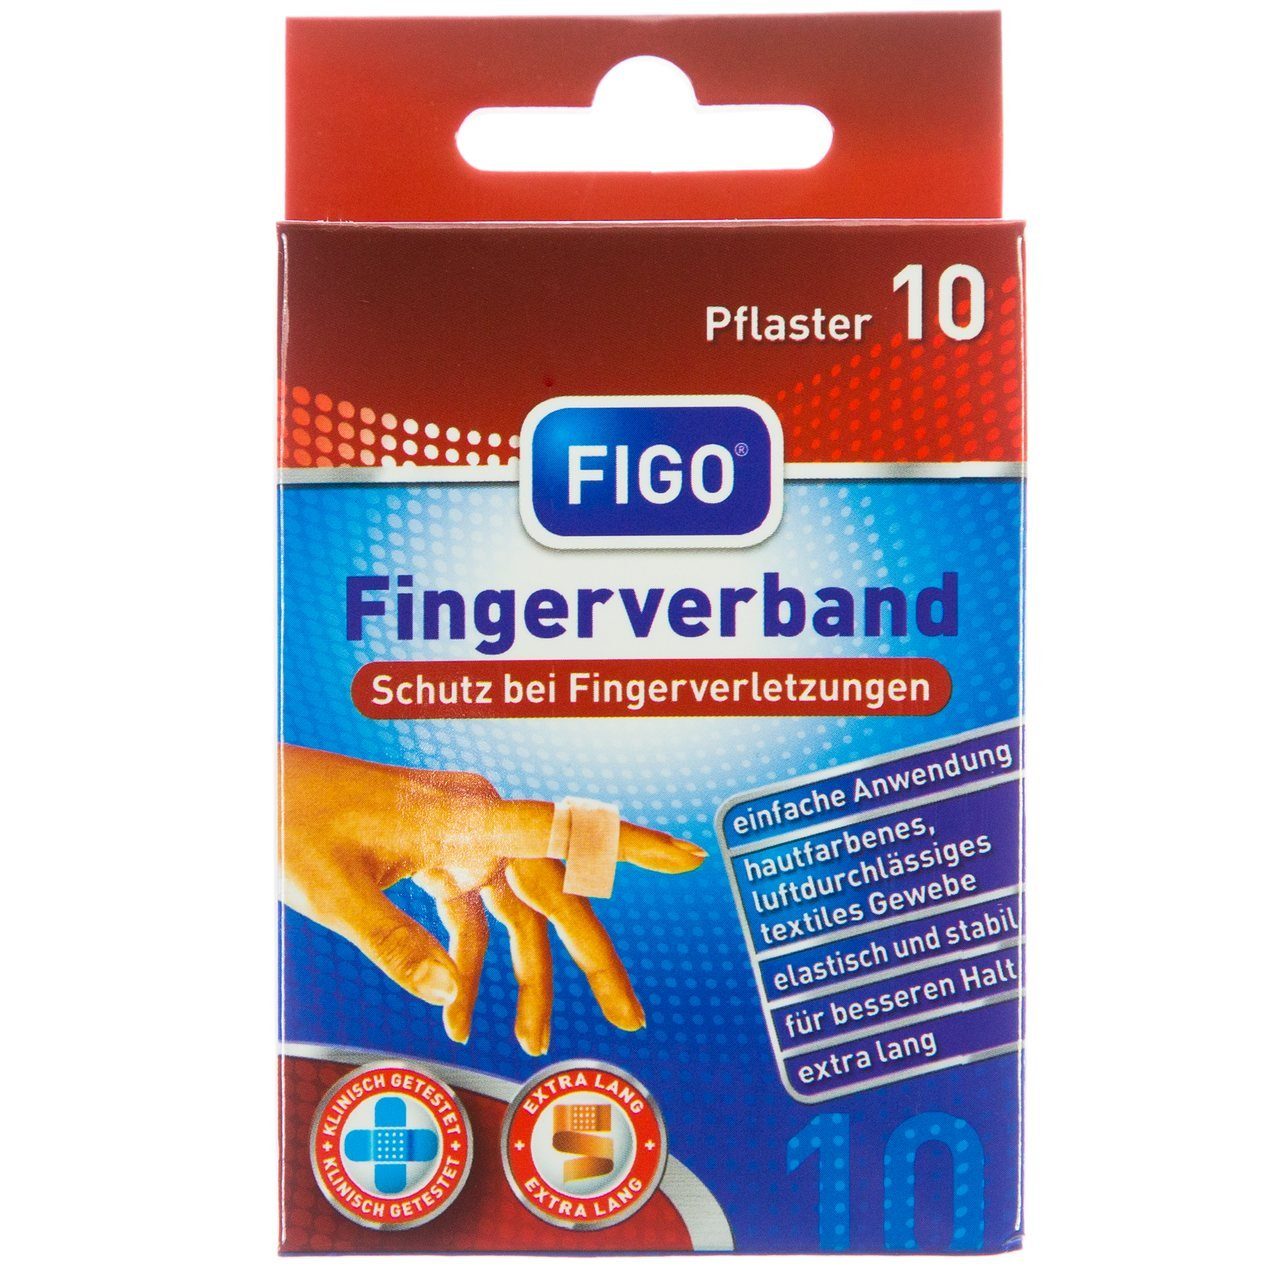 FIGO Wundpflaster Figo Fingerverband 10 er Pflaster Lang 12 cm x 2 cm  Wundpflaster Pflas (Set, 10 St., Pflaster), Universal Pflaster Heftpflaster  Fingerpflaster Pflasterverband